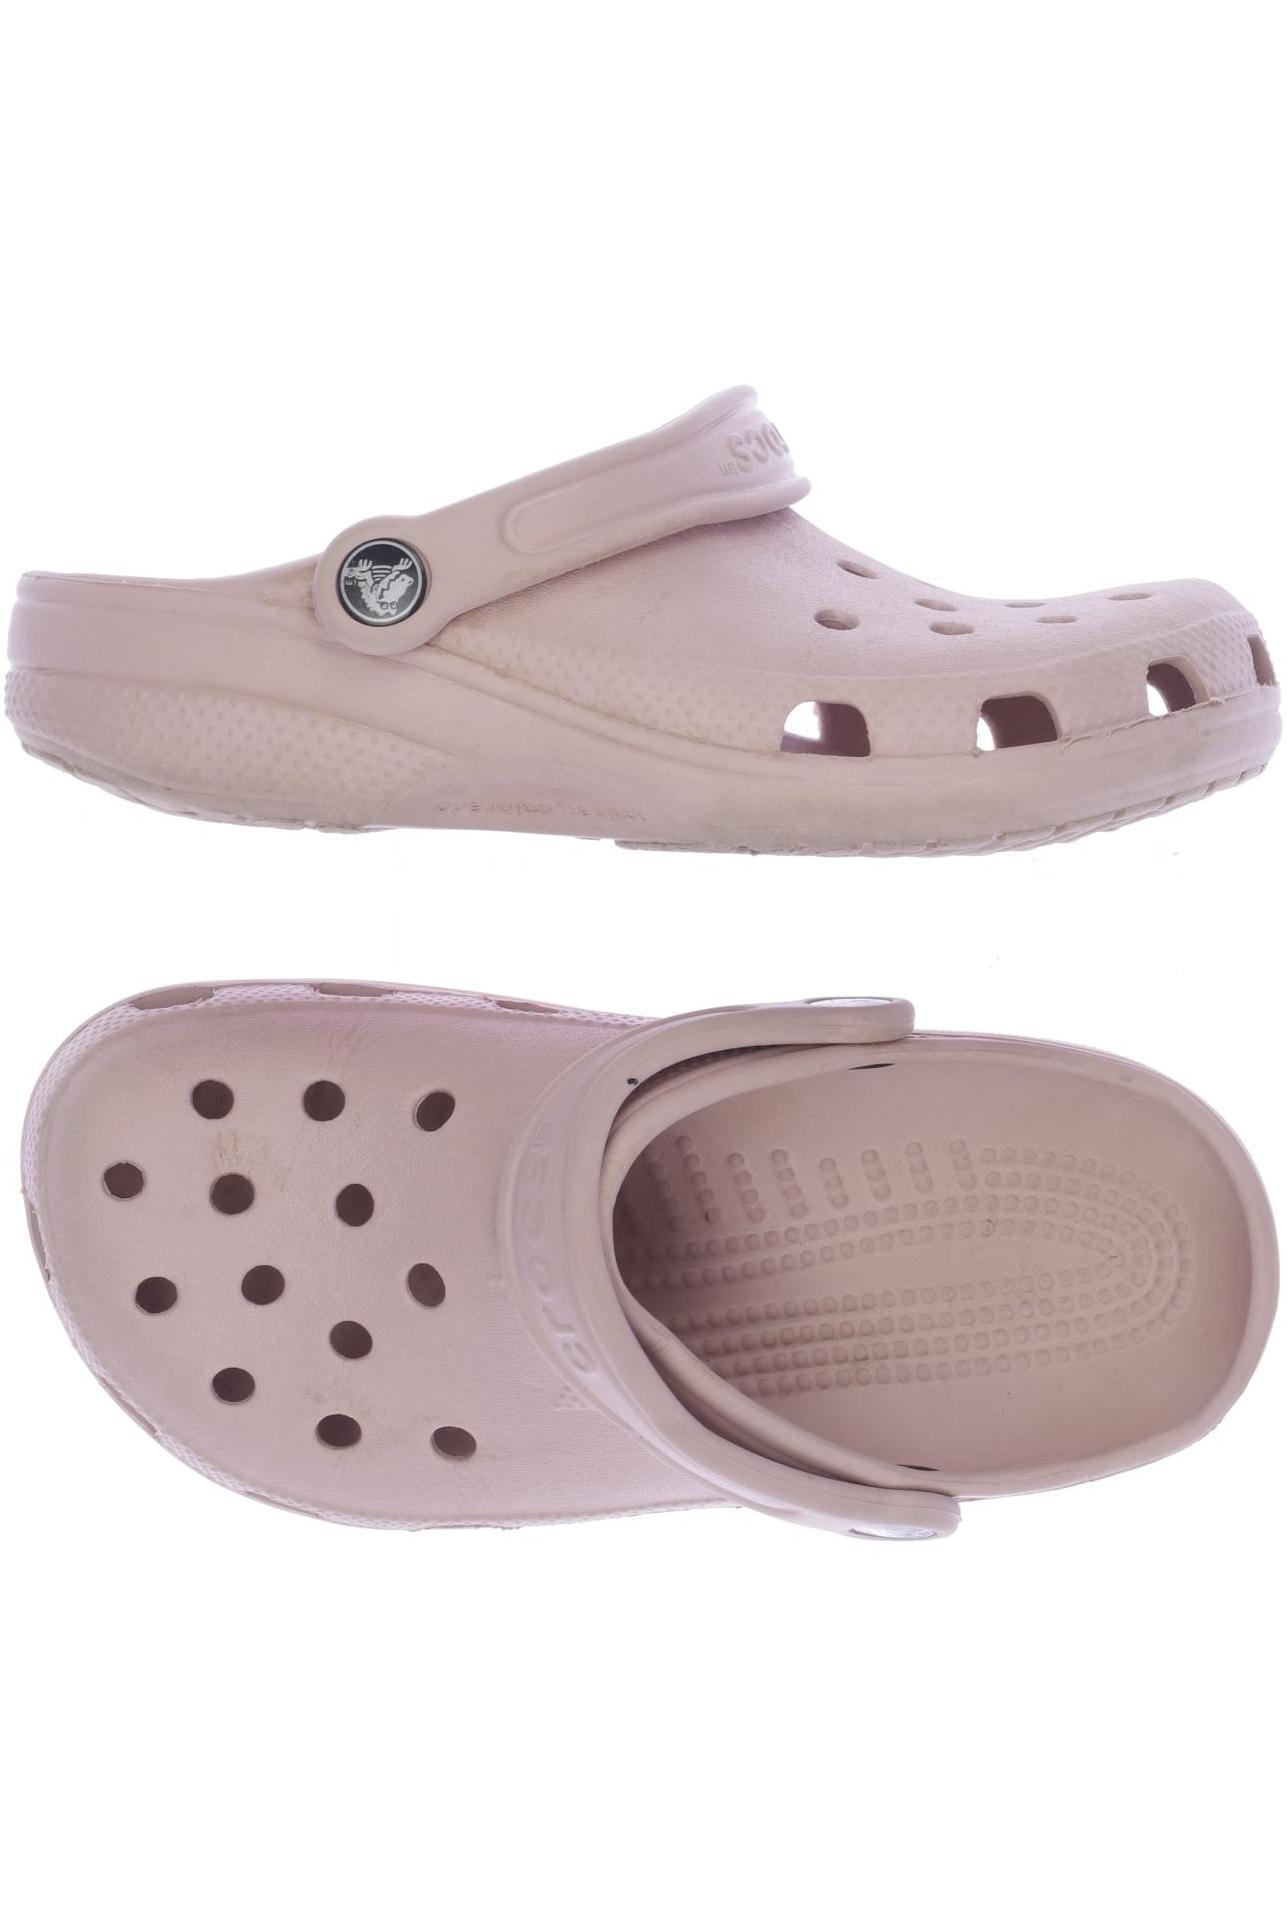 Crocs Damen Sandale, pink von Crocs